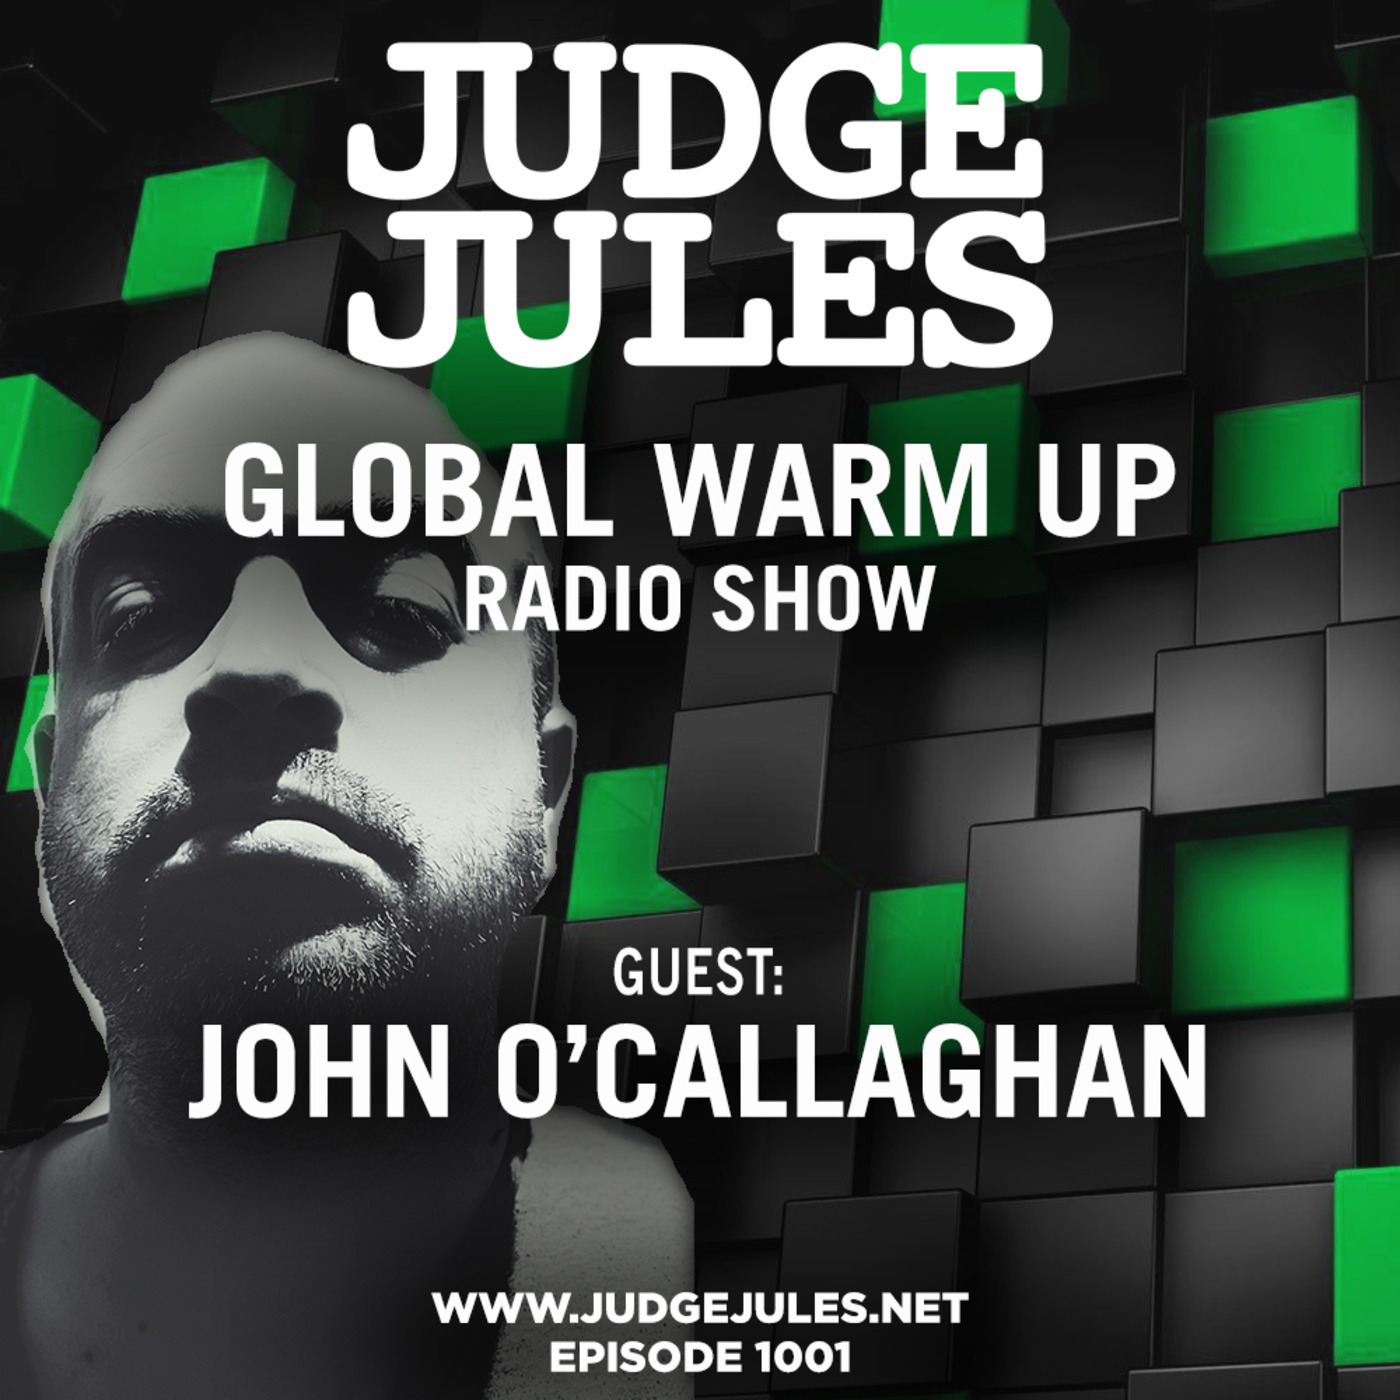 Episode 1001: JUDGE JULES PRESENTS THE GLOBAL WARM UP EPISODE 1001